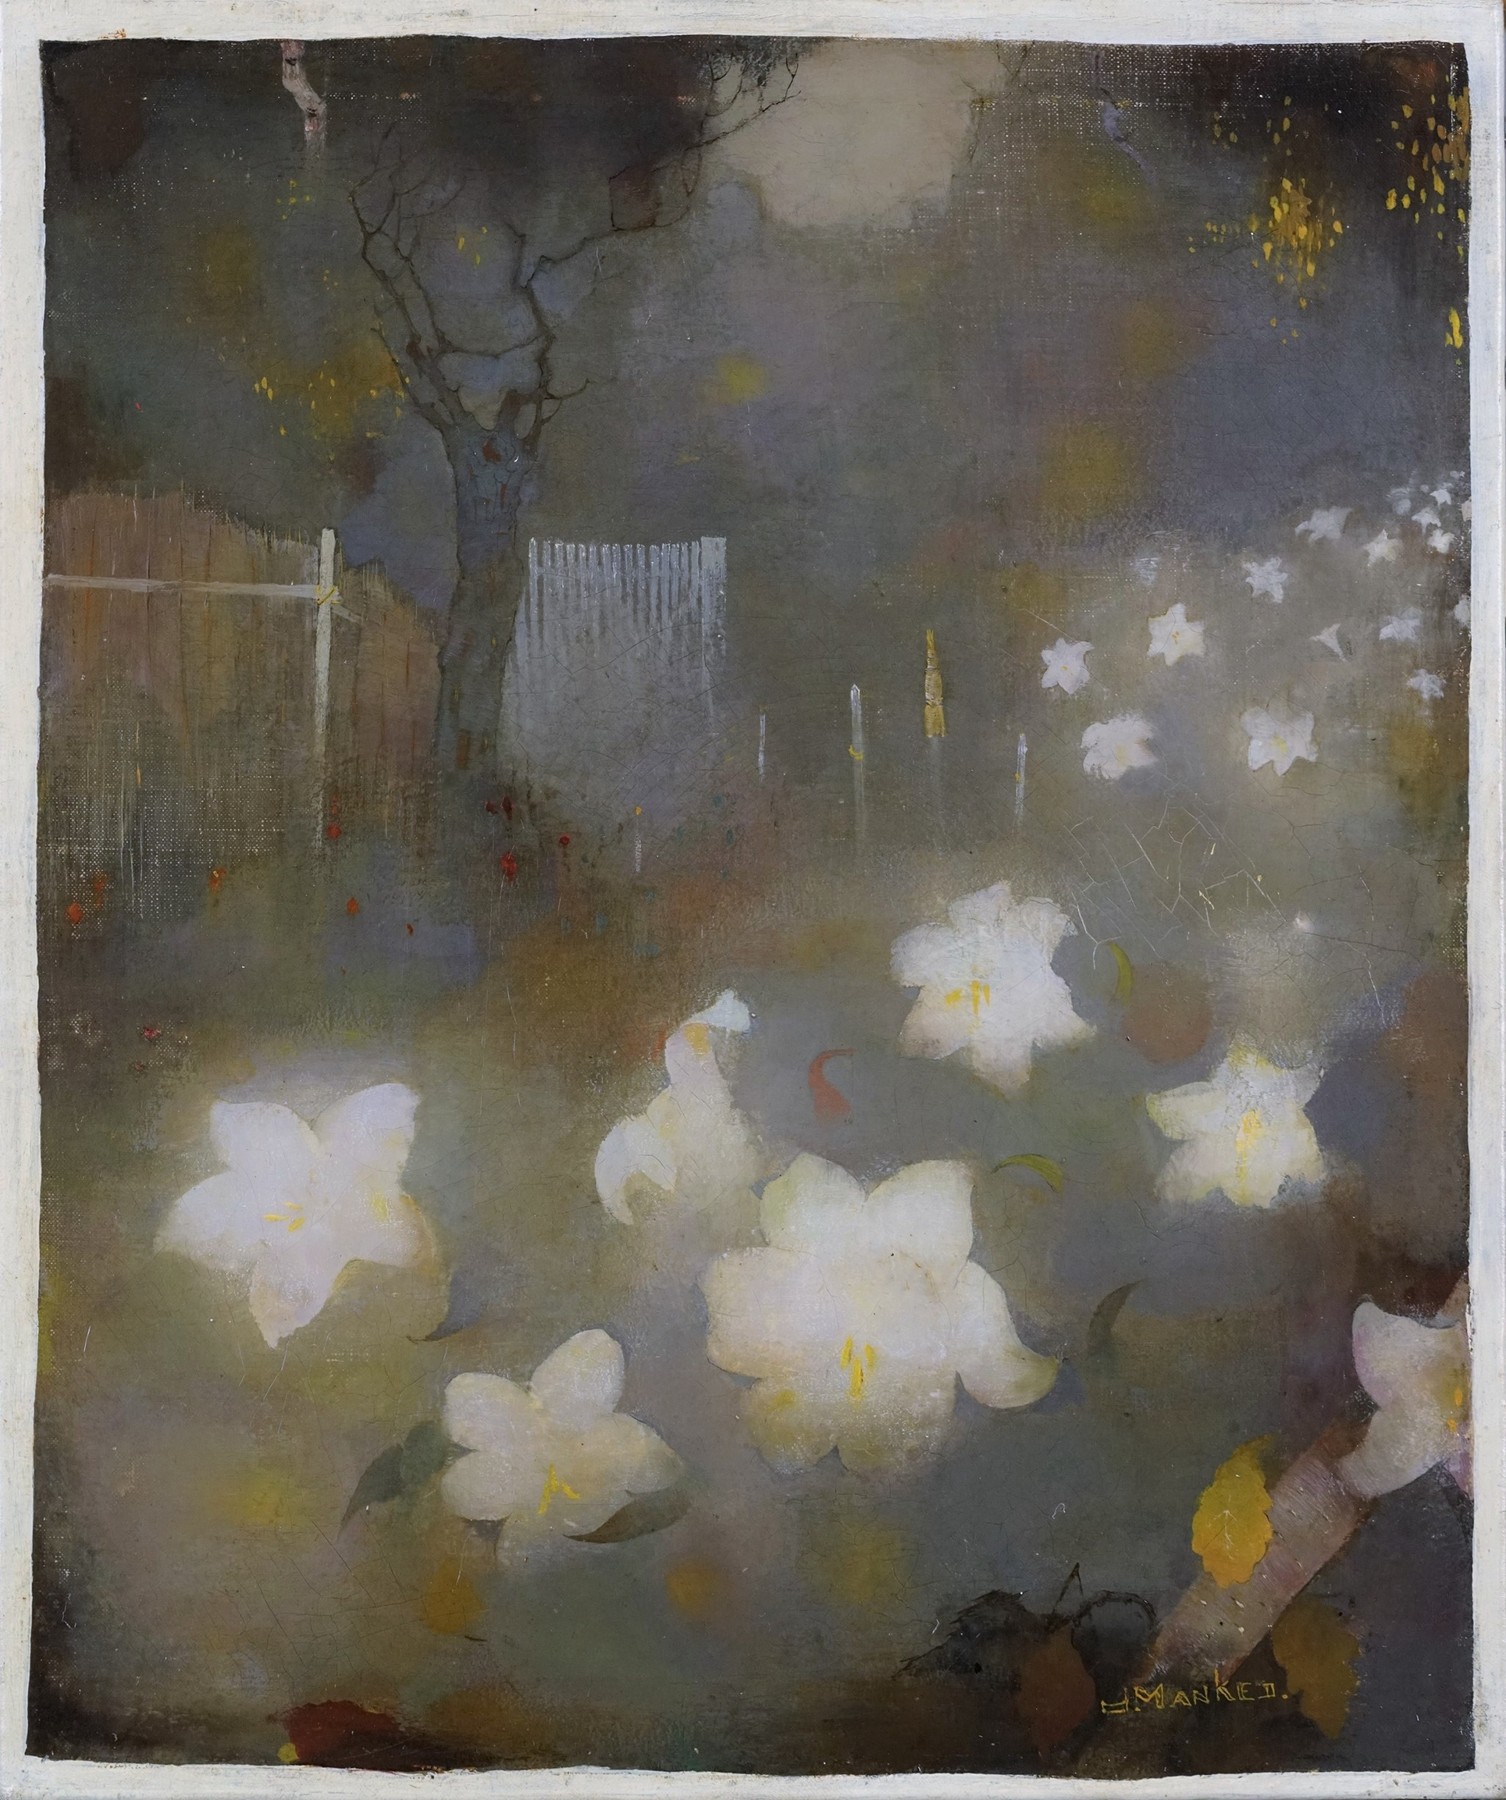 Jan Mankes (1889-1920, Dutch) ~ Lilies, 1910